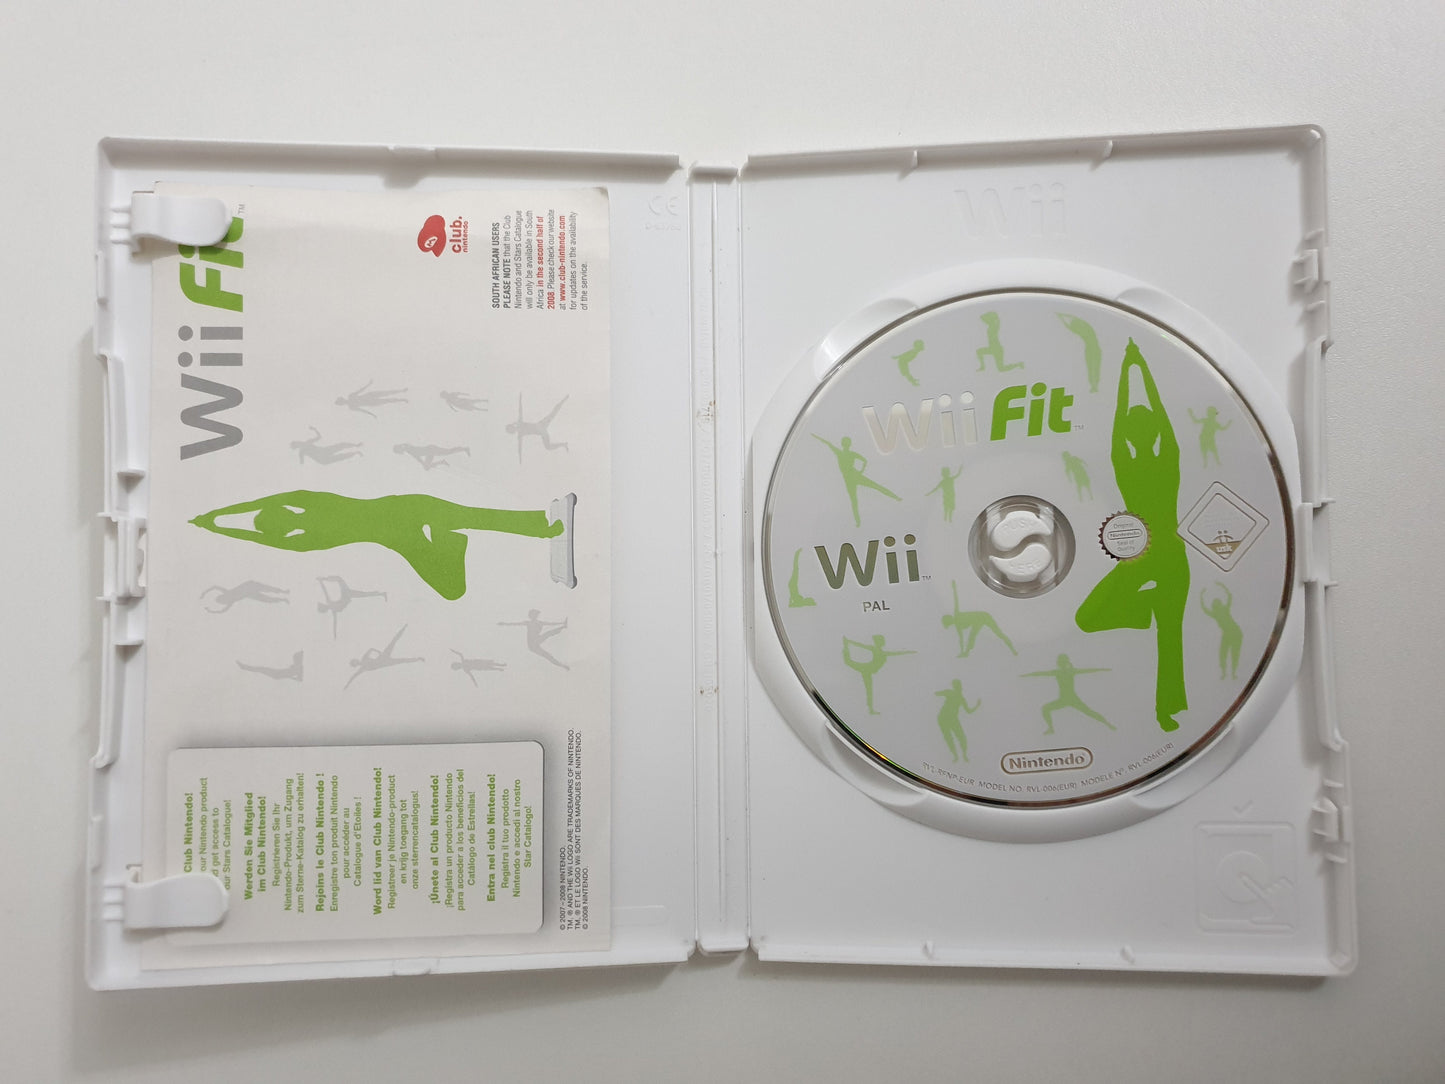 Wii Fit Wii - Occasion bon état